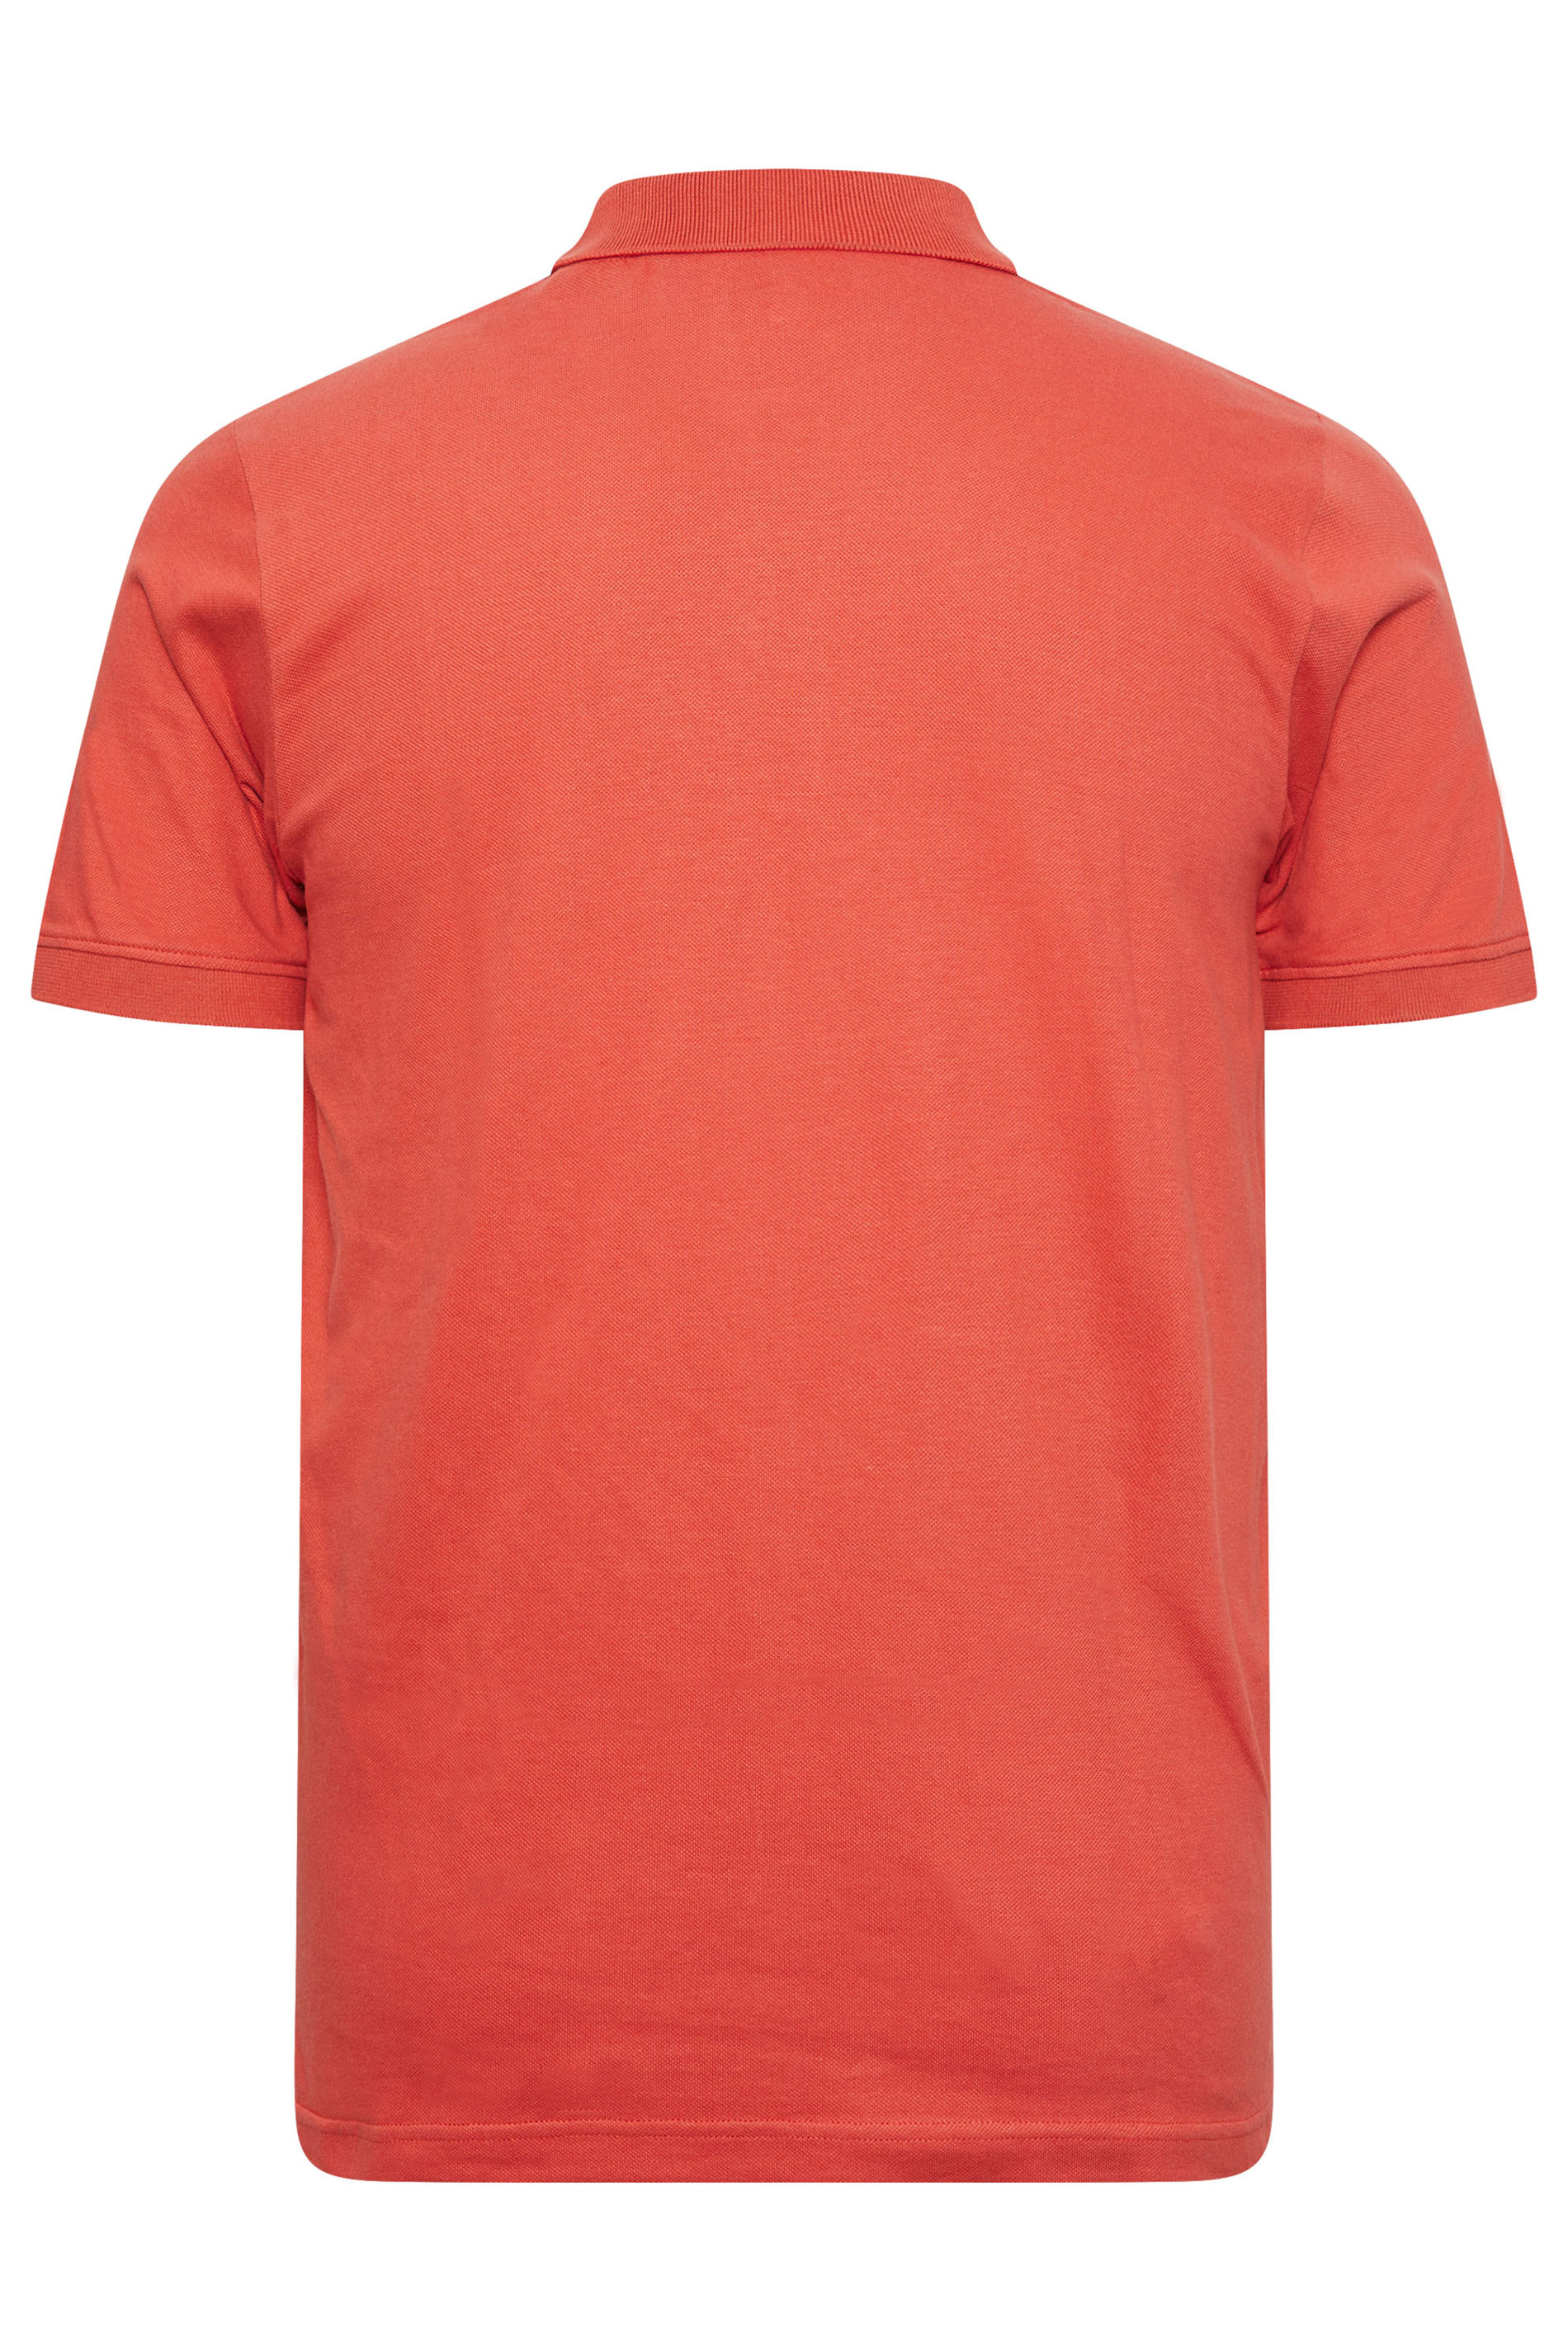 BadRhino Big & Tall Red Polo Shirt | BadRhino 3